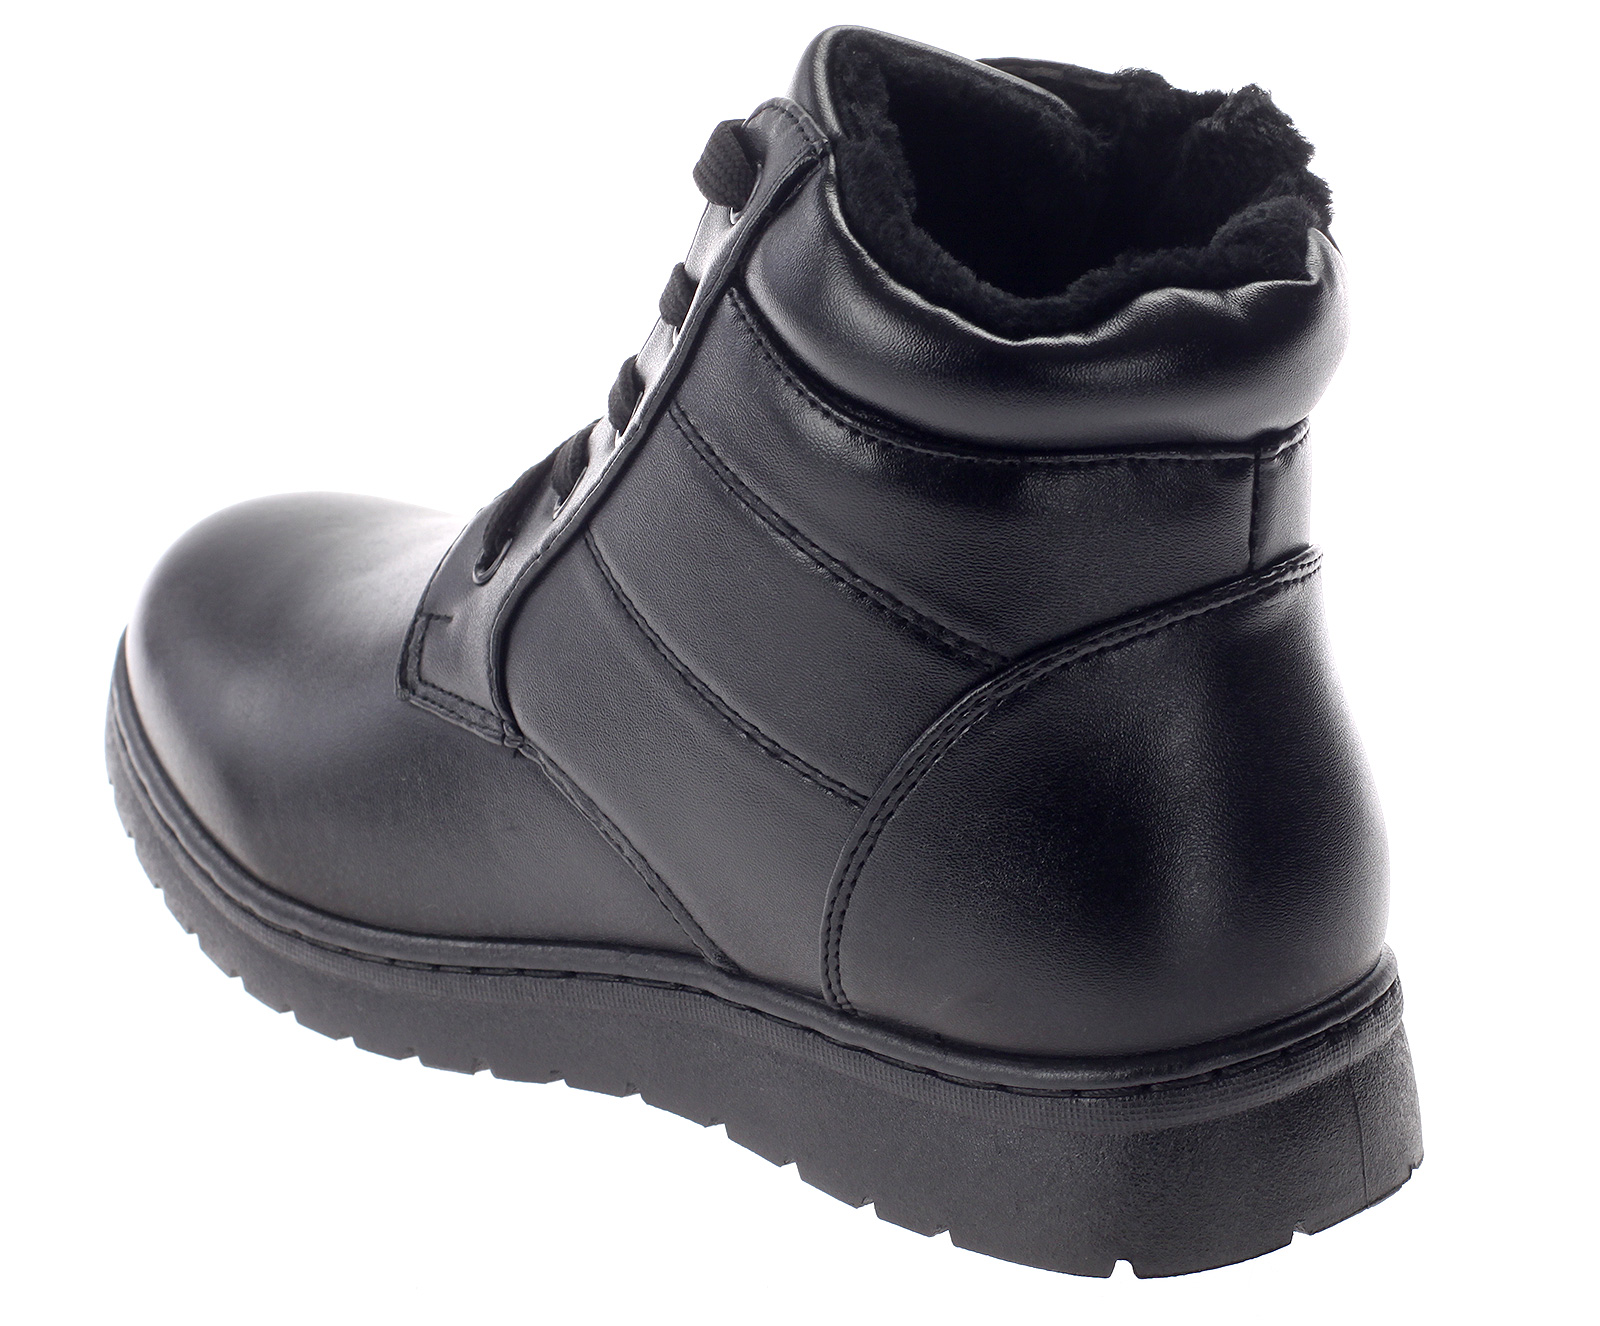 Damen Stiefeletten Winterschuhe Stiefel Warm gefütterte Schuhe Boots Booty KF01